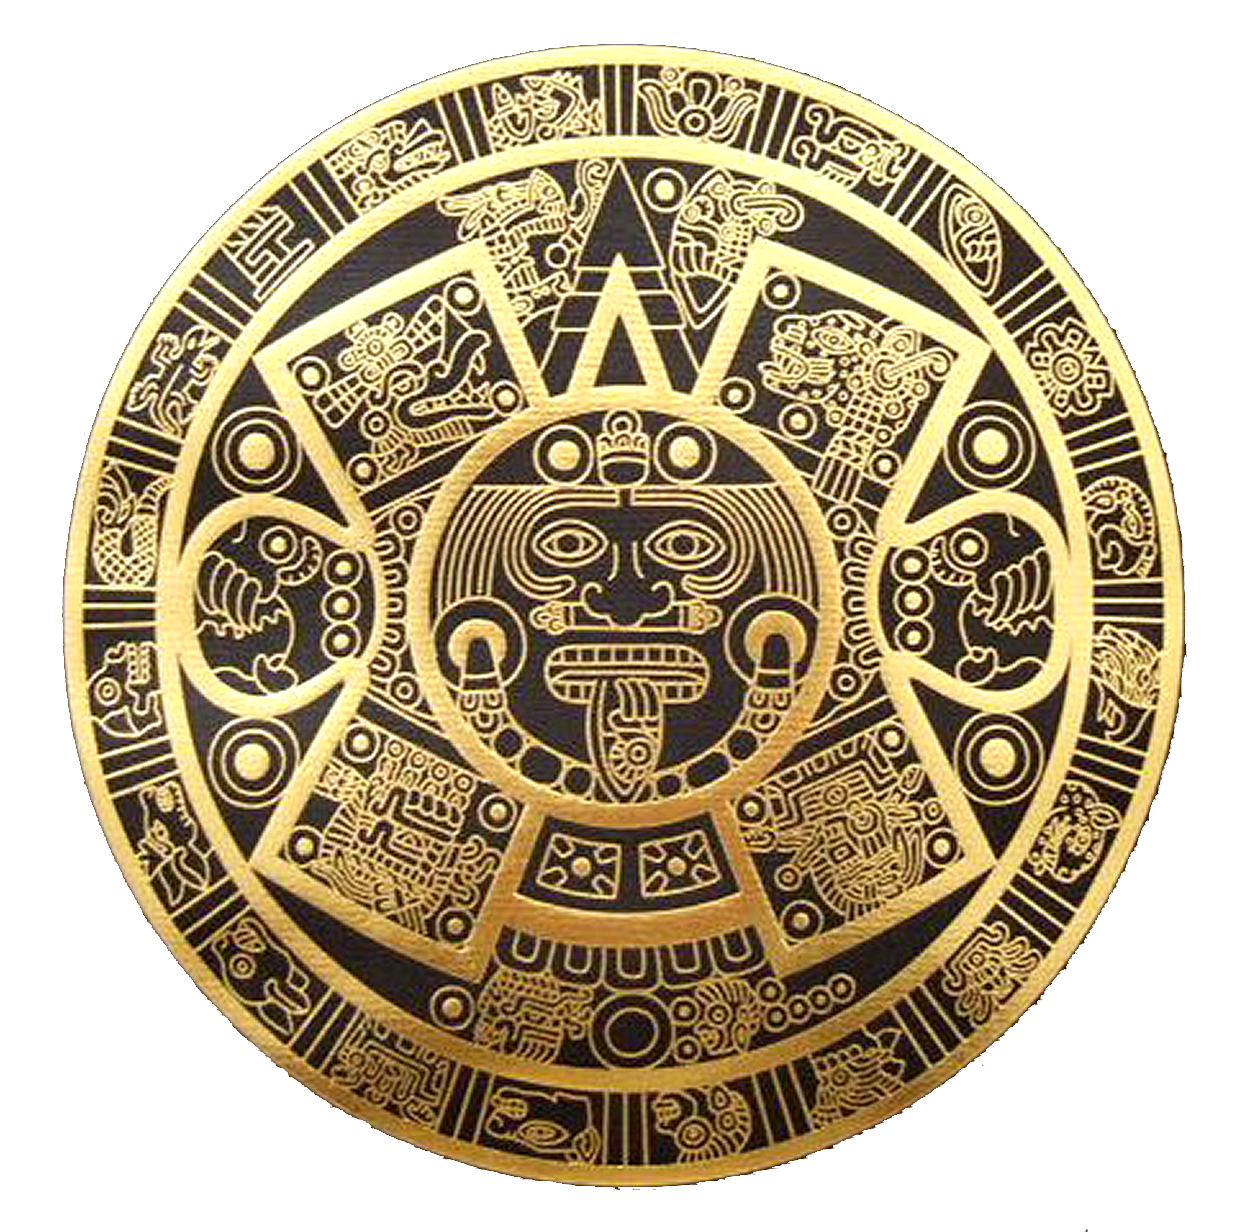 Иллюстрация календарь майя. Ацтекский календарь Майя. Солнечный календарь ацтеков. Древний Ацтекский календарь. Хааб – Солнечный календарь Майя.